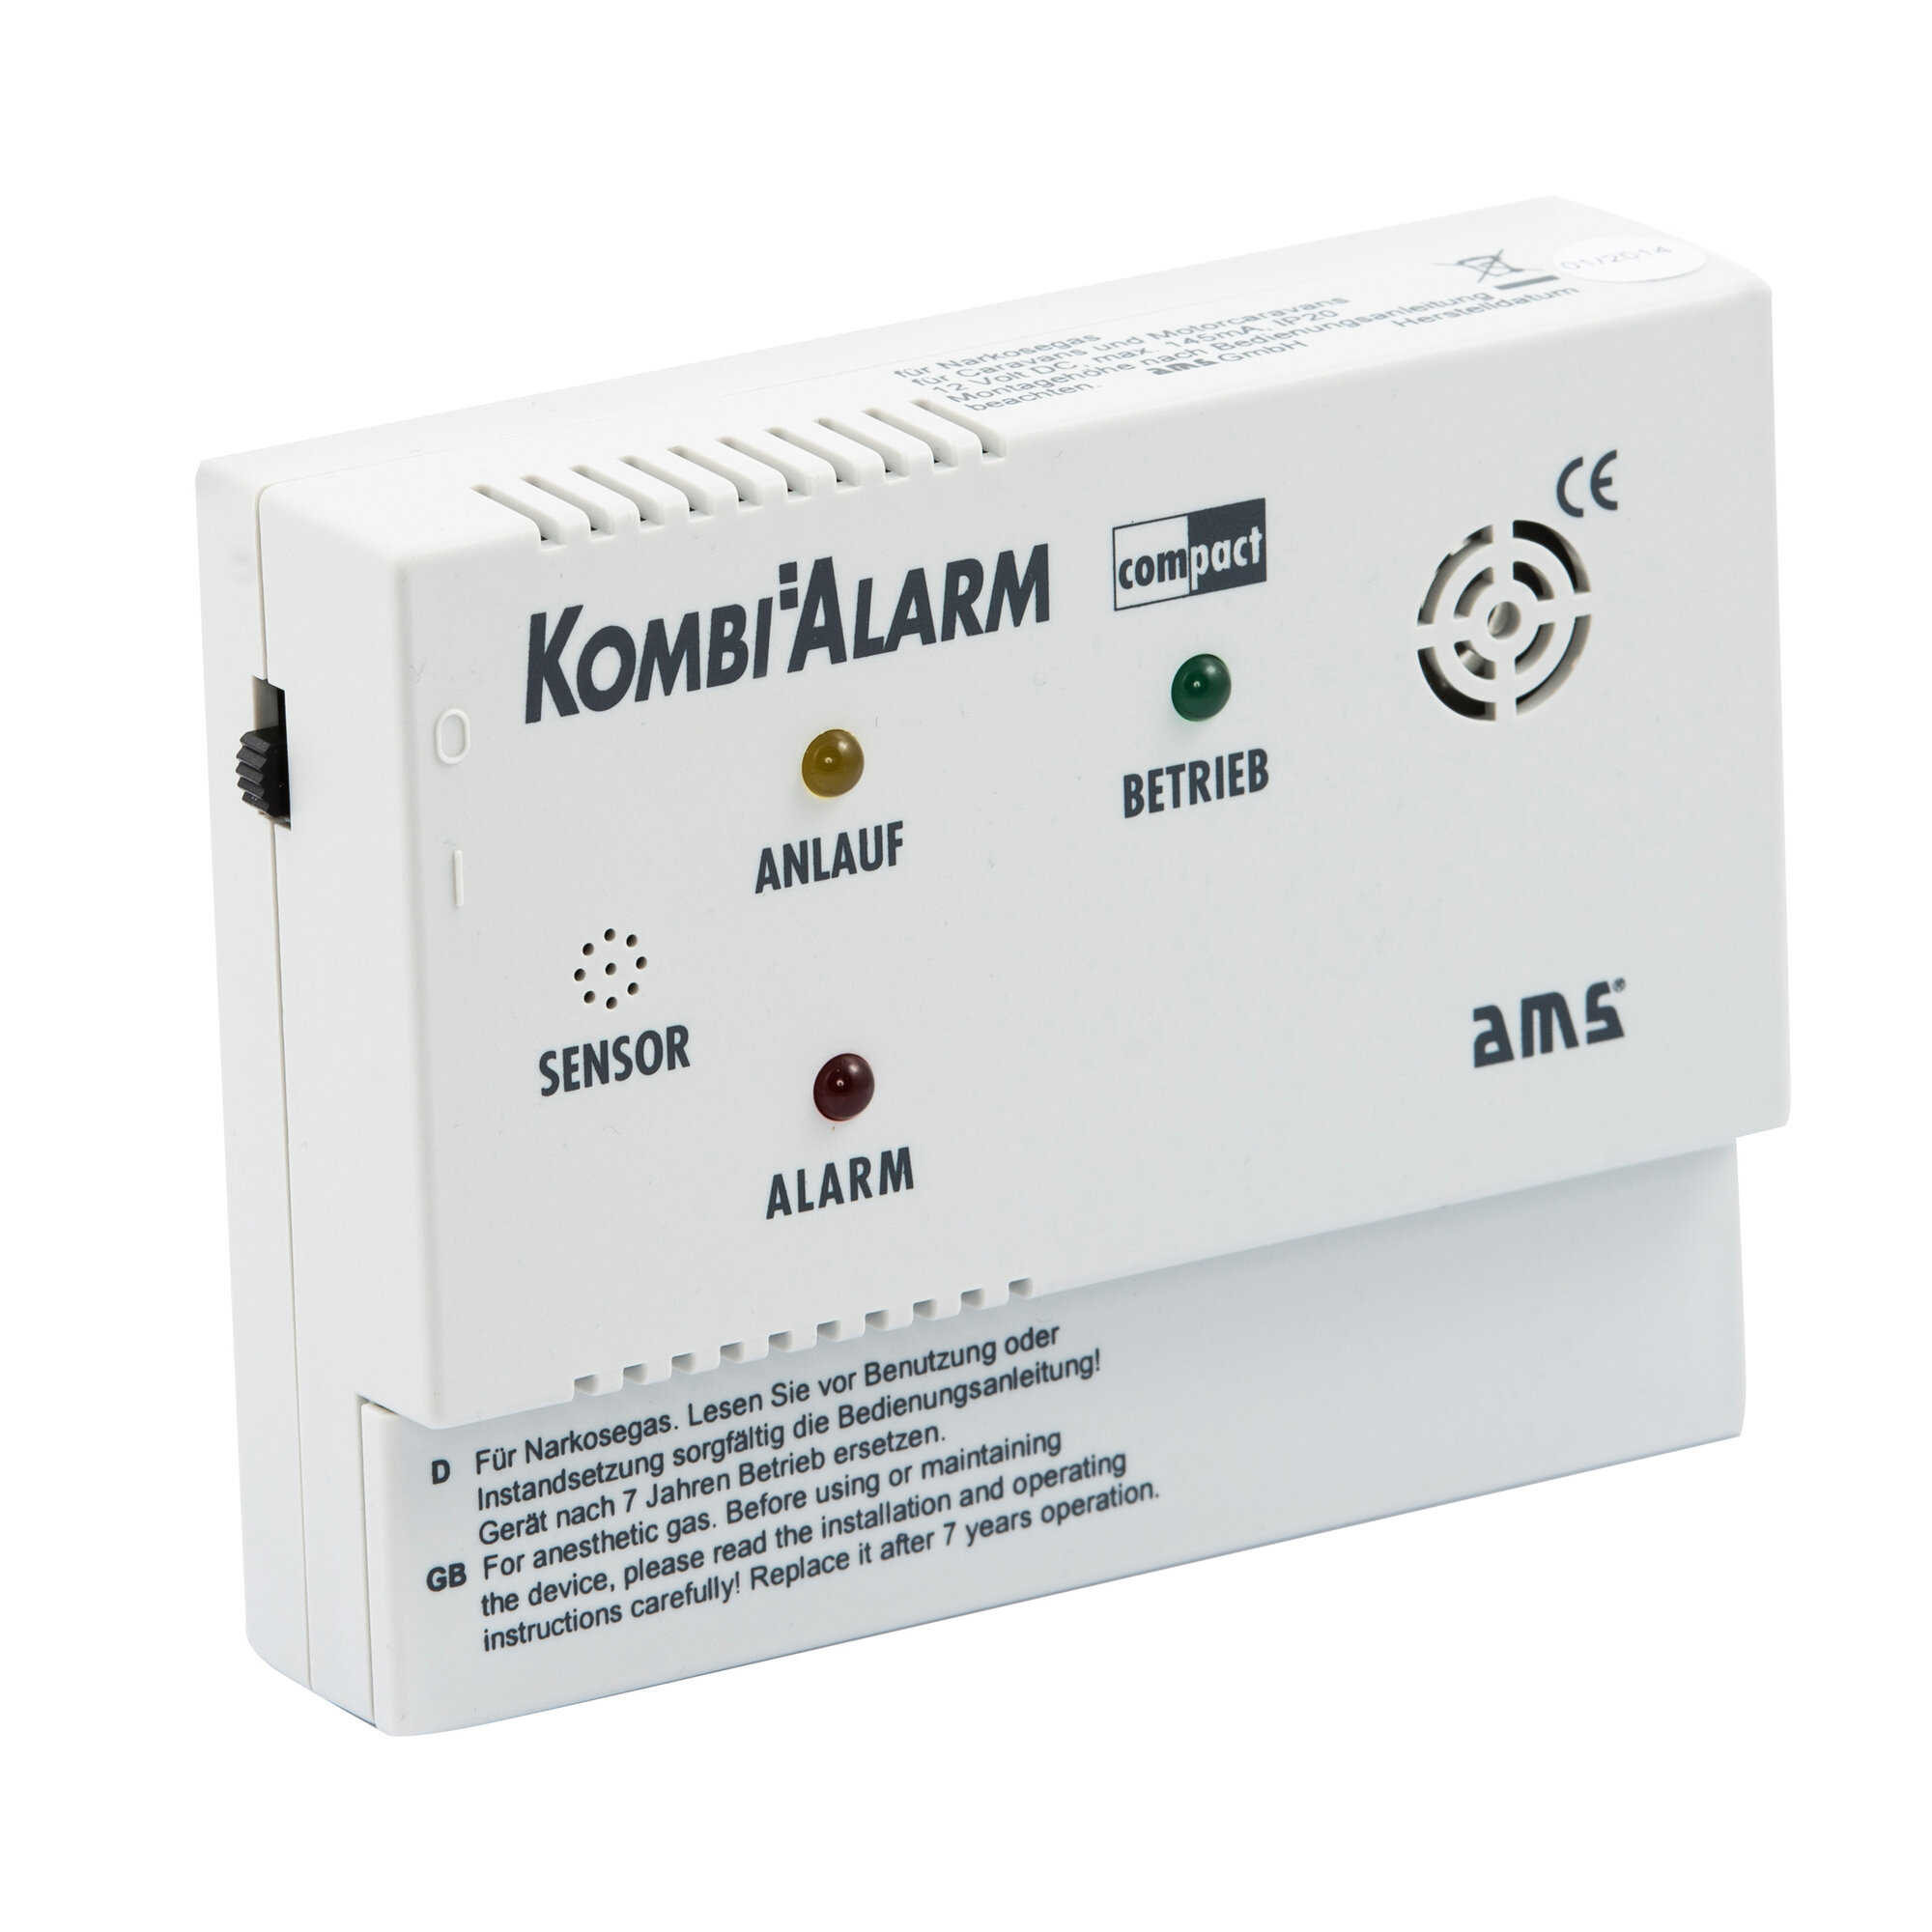 Kombi Alarm Compact